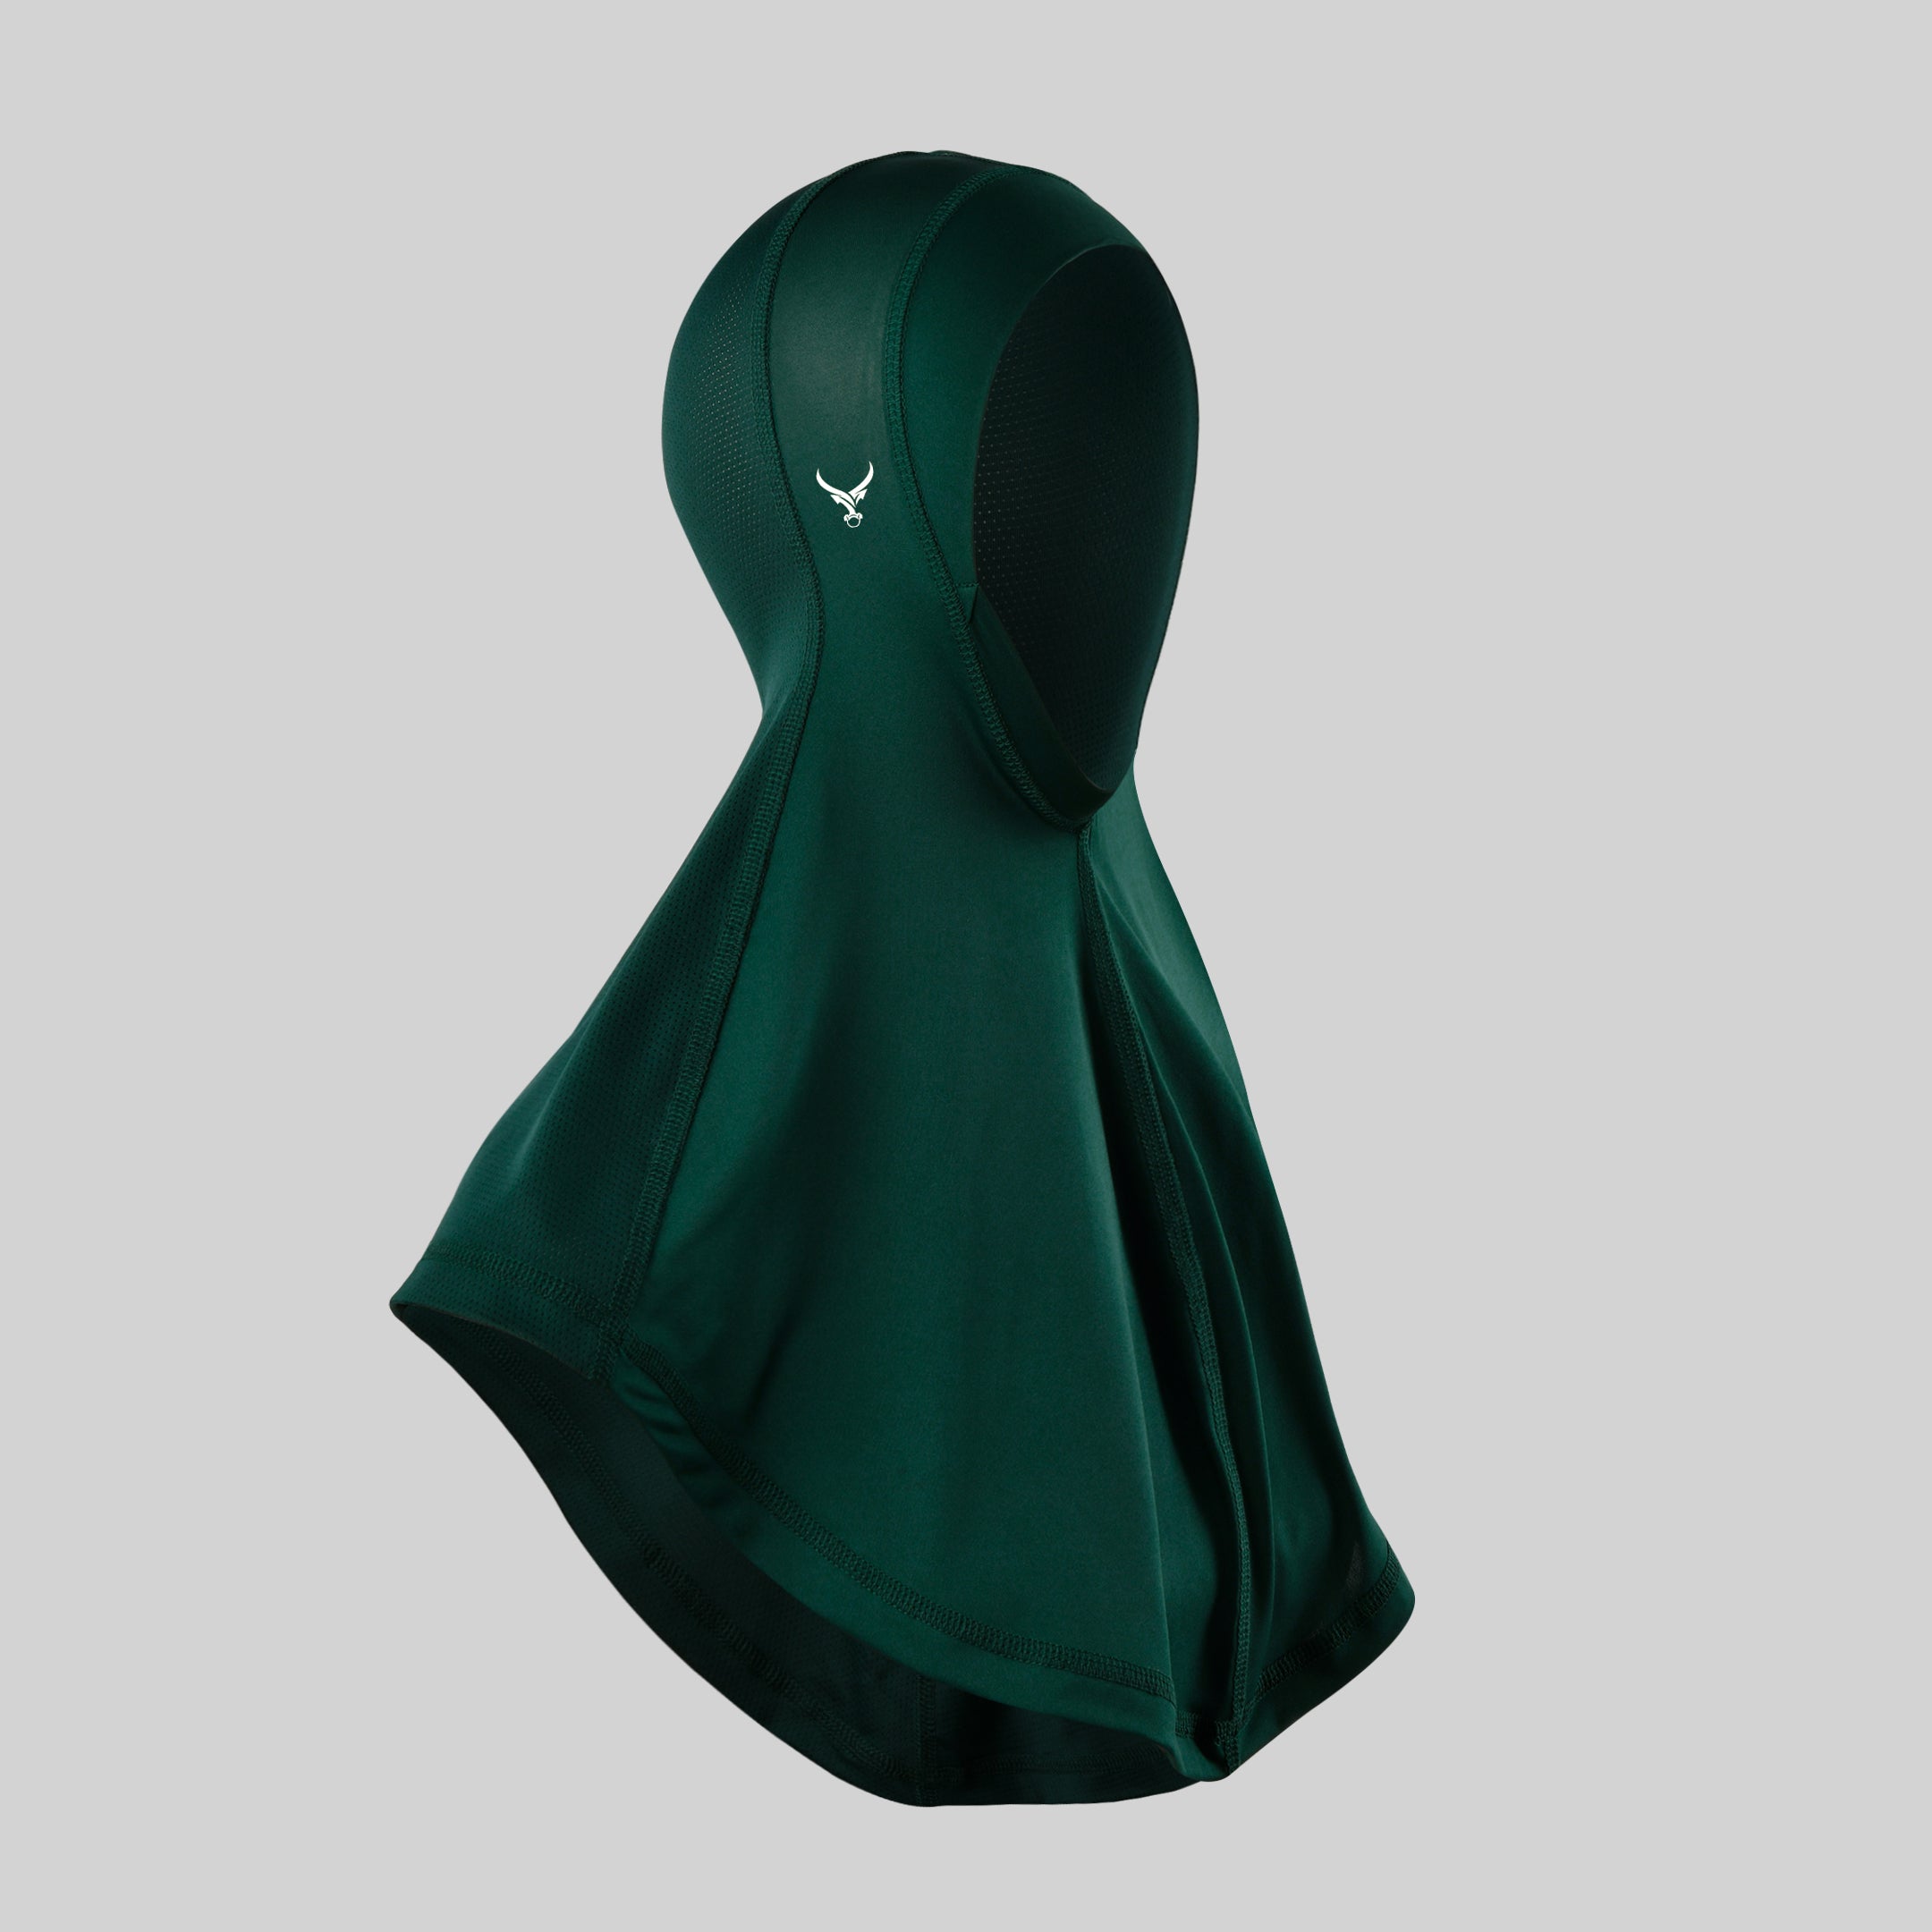 IRONGEAR Sports Hijab 2.0